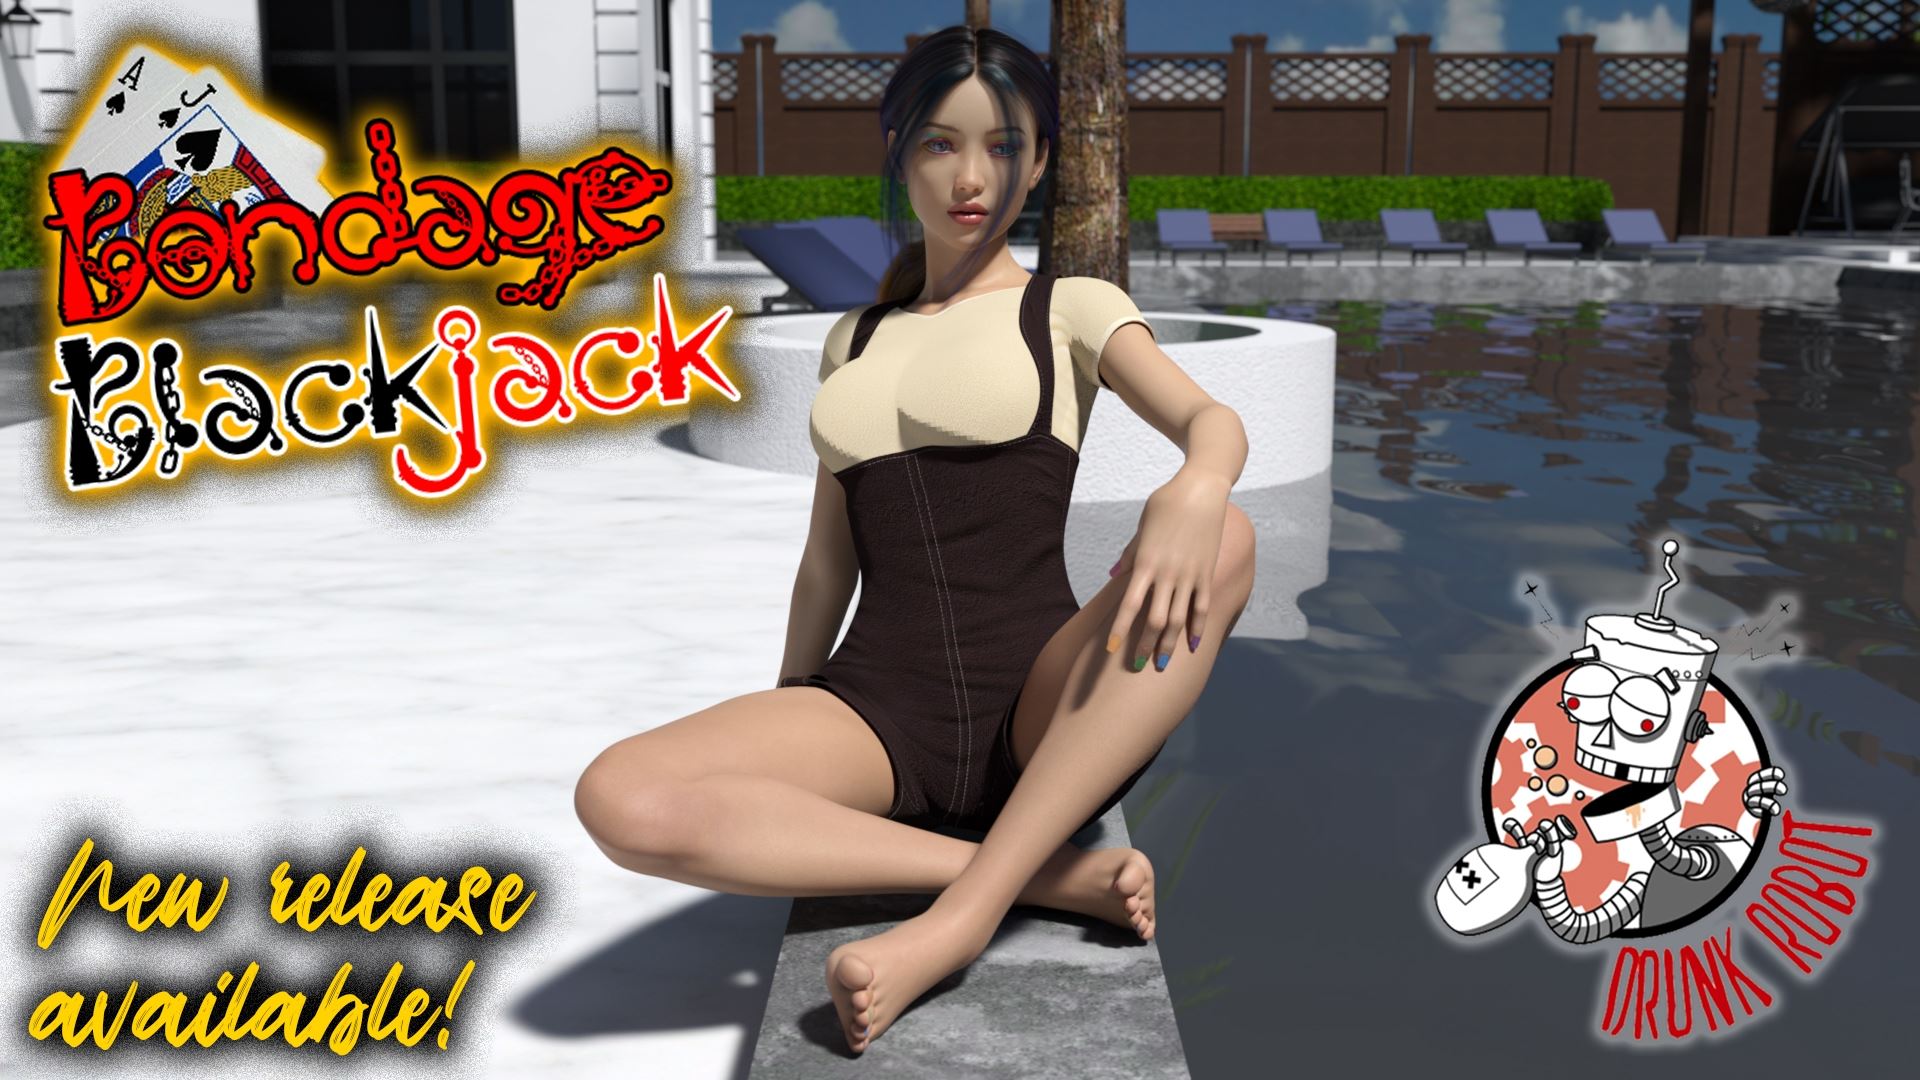 Bondage Blackjack porn xxx game download cover